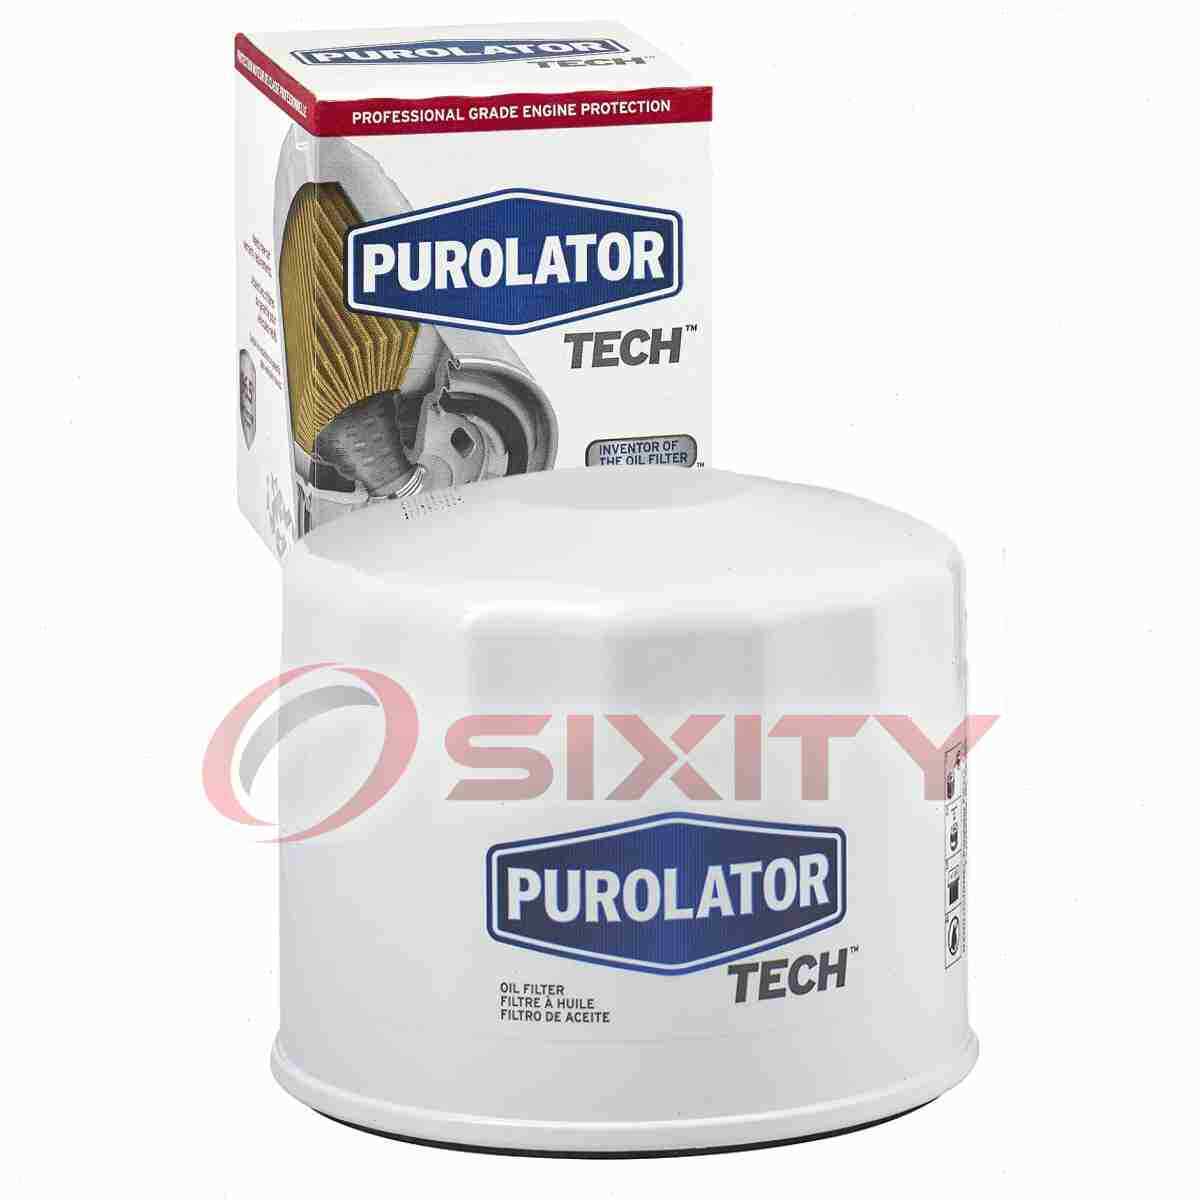 Purolator TECH TL15313 Engine Oil Filter for XG30 X5313 X49 WPH454 VO65 ny